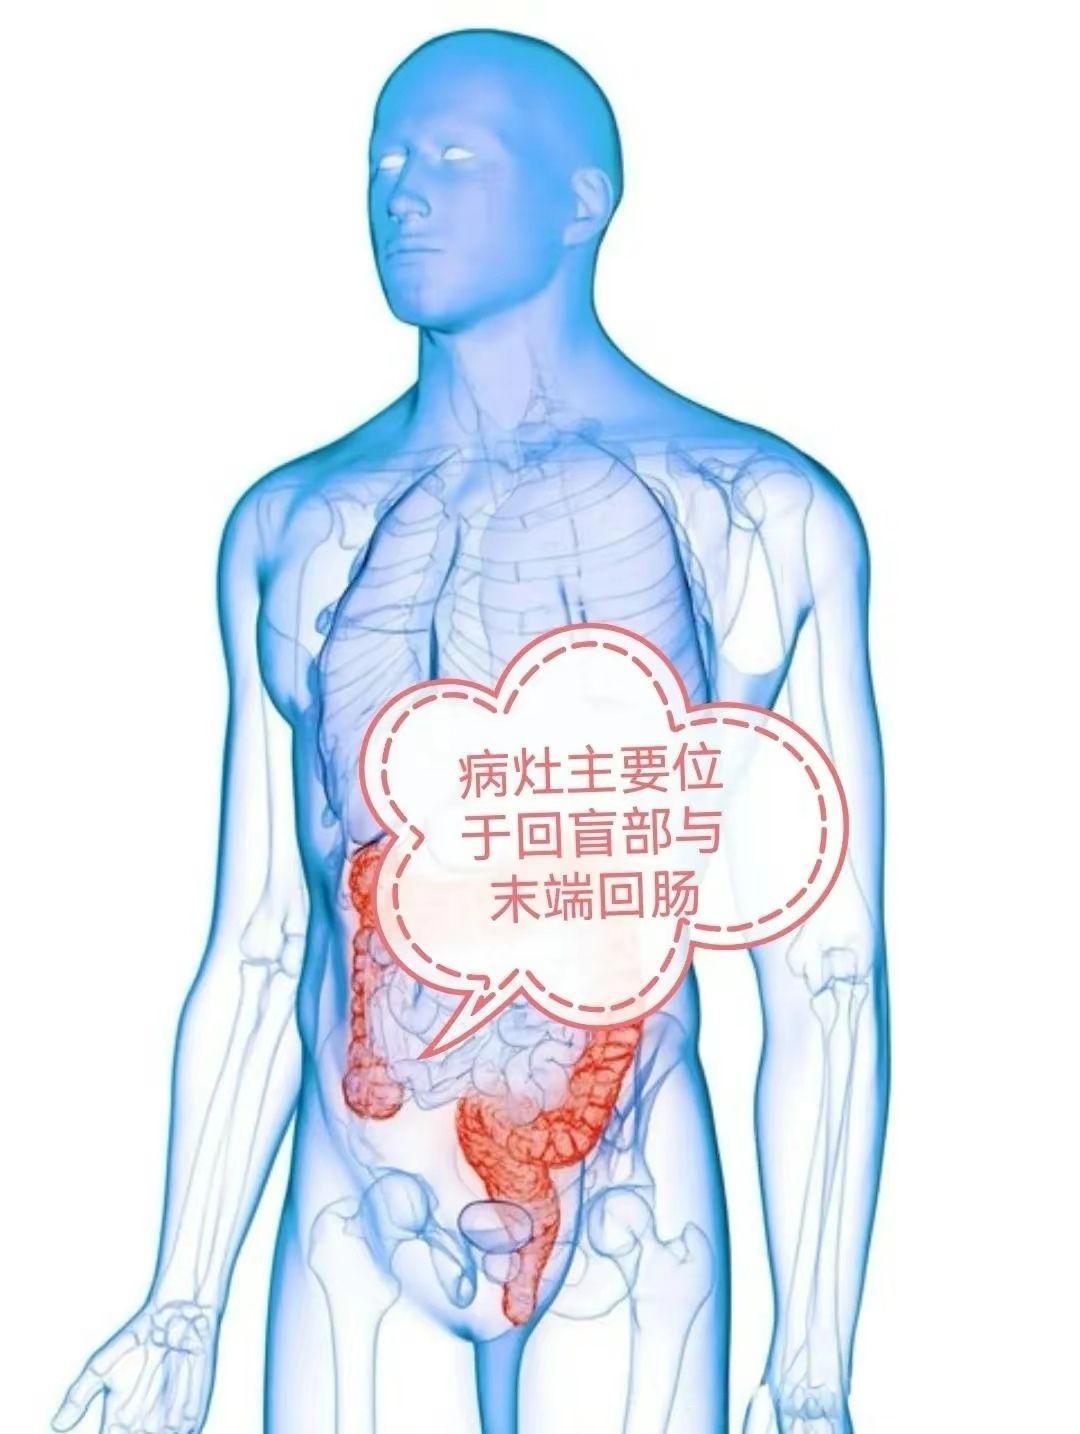 Nature Communications | 北京大学白凡研究组揭示结直肠癌近端淋巴结与远端器官的转移路径 - BIOPIC网站中文版